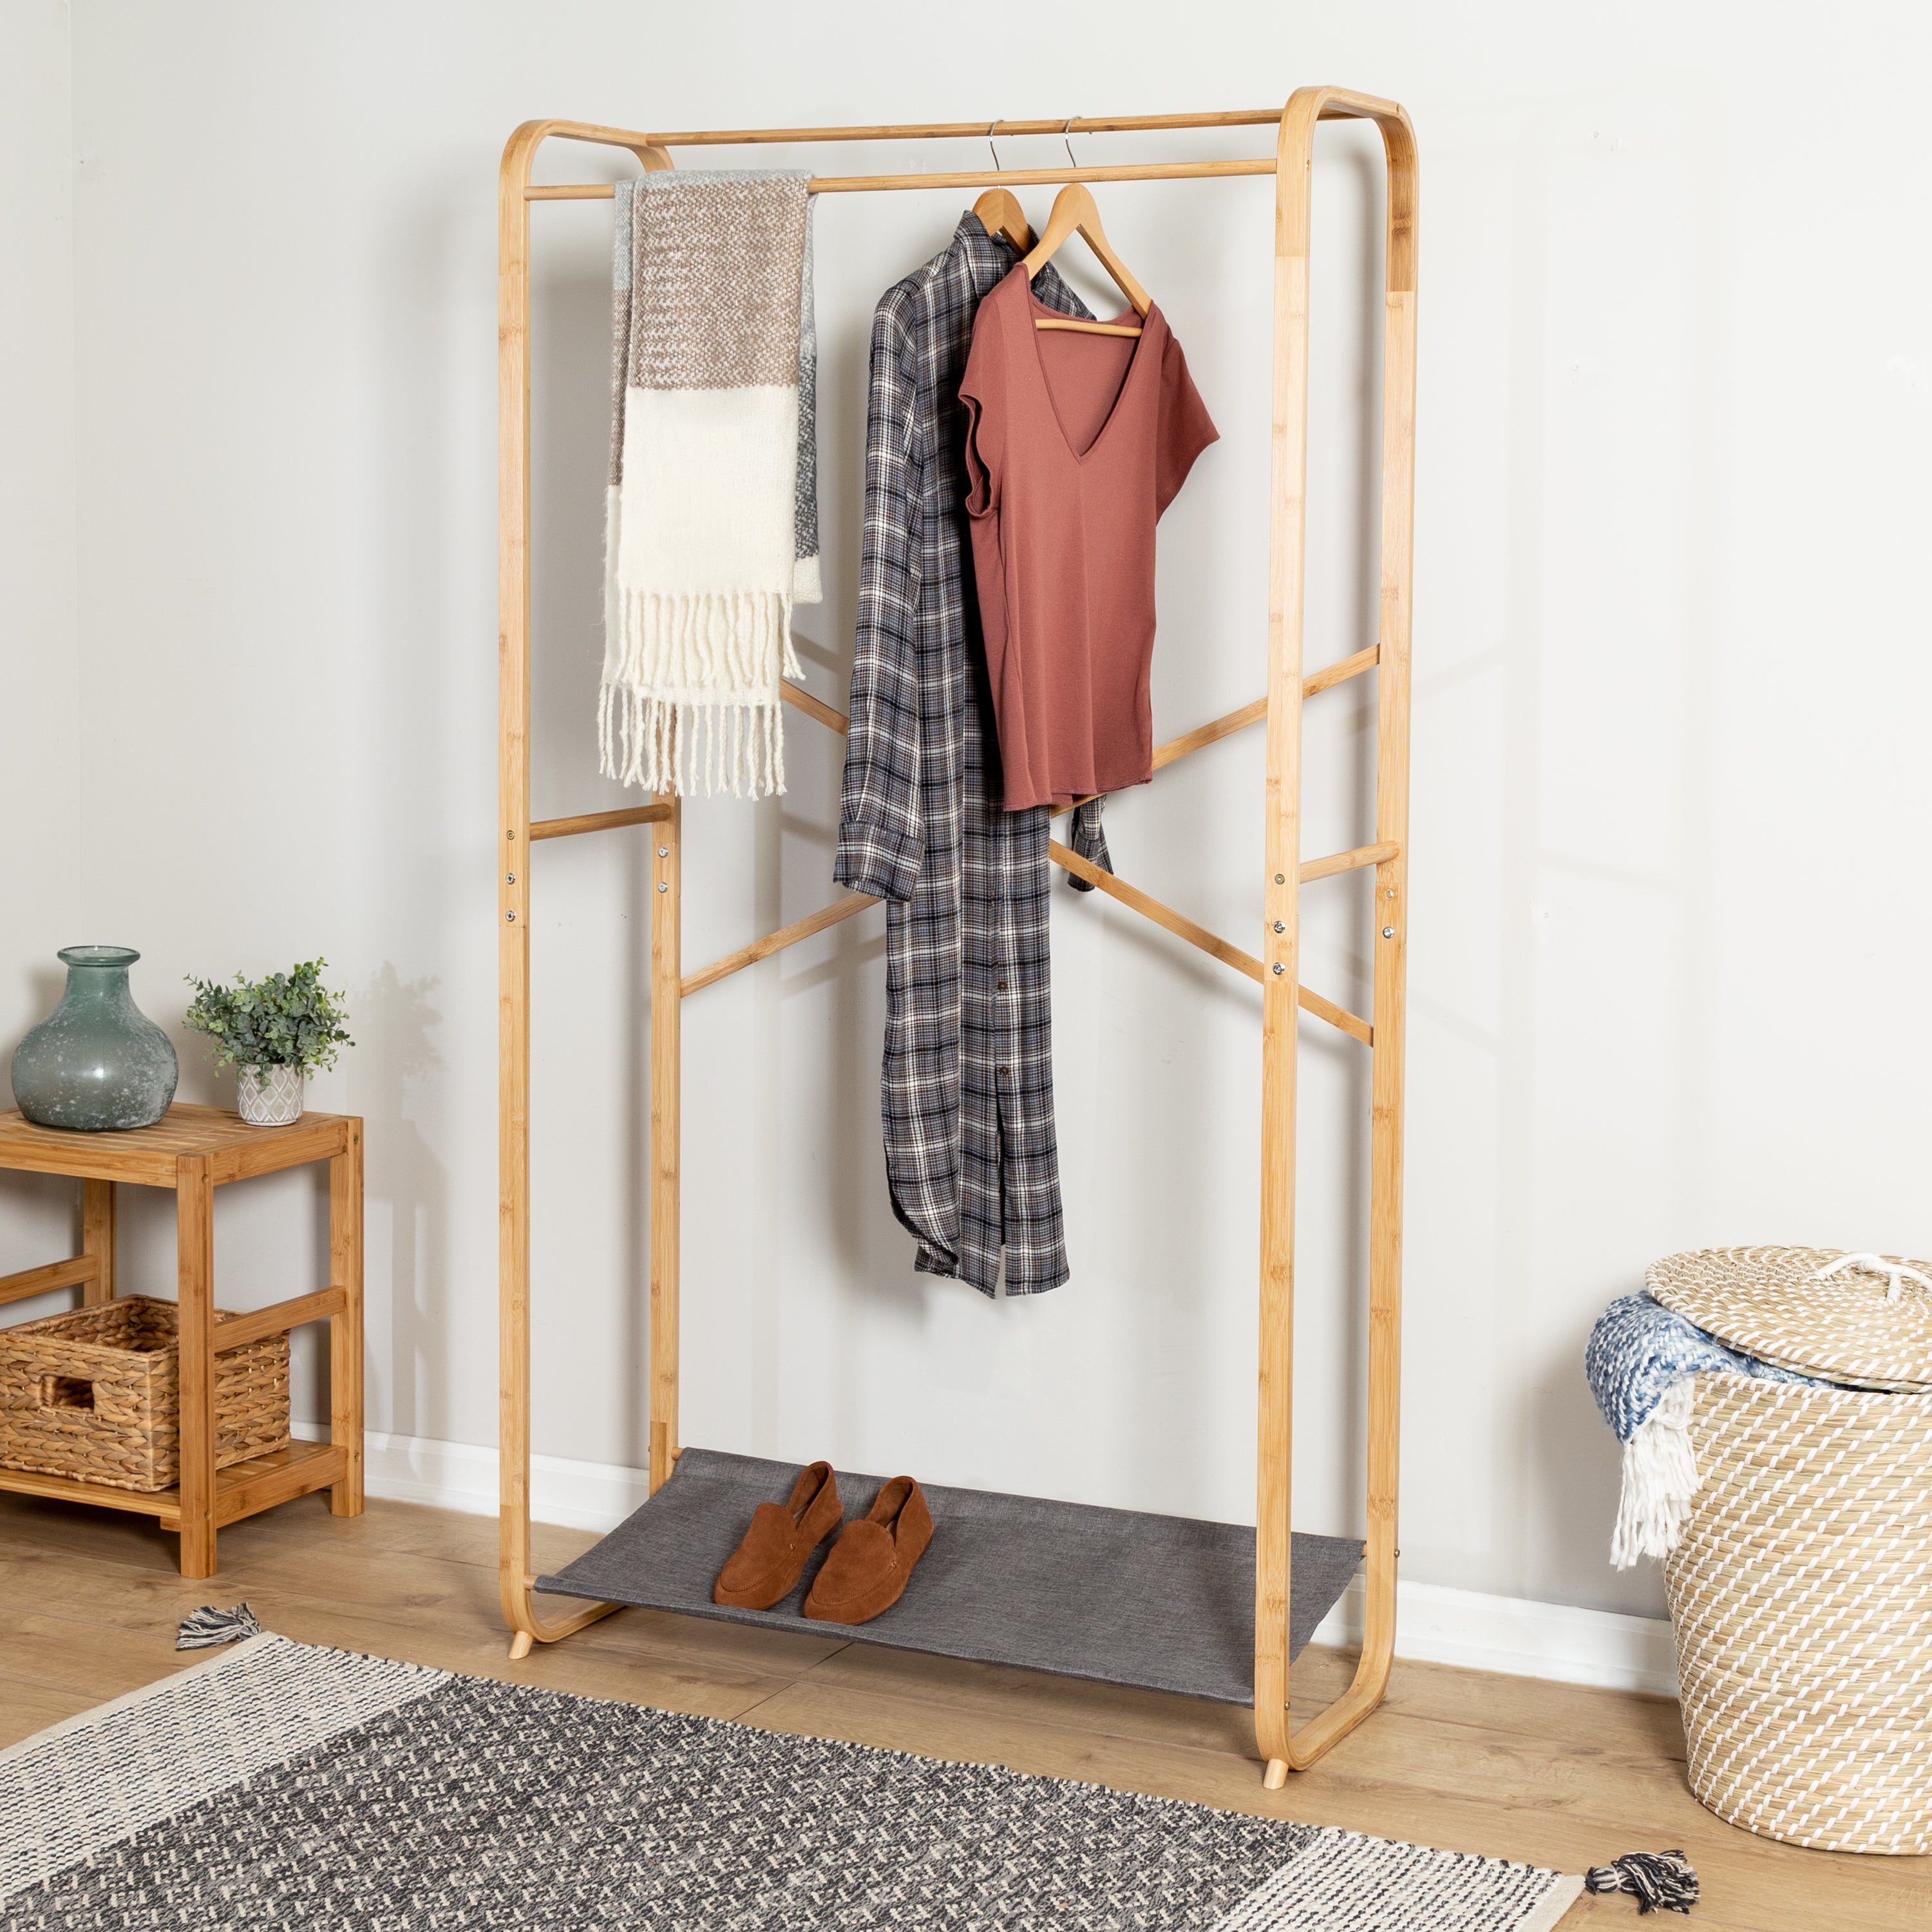 Ufine Bamboo Garment Rack 6 Tier Storage Shelves Clothes Hanging